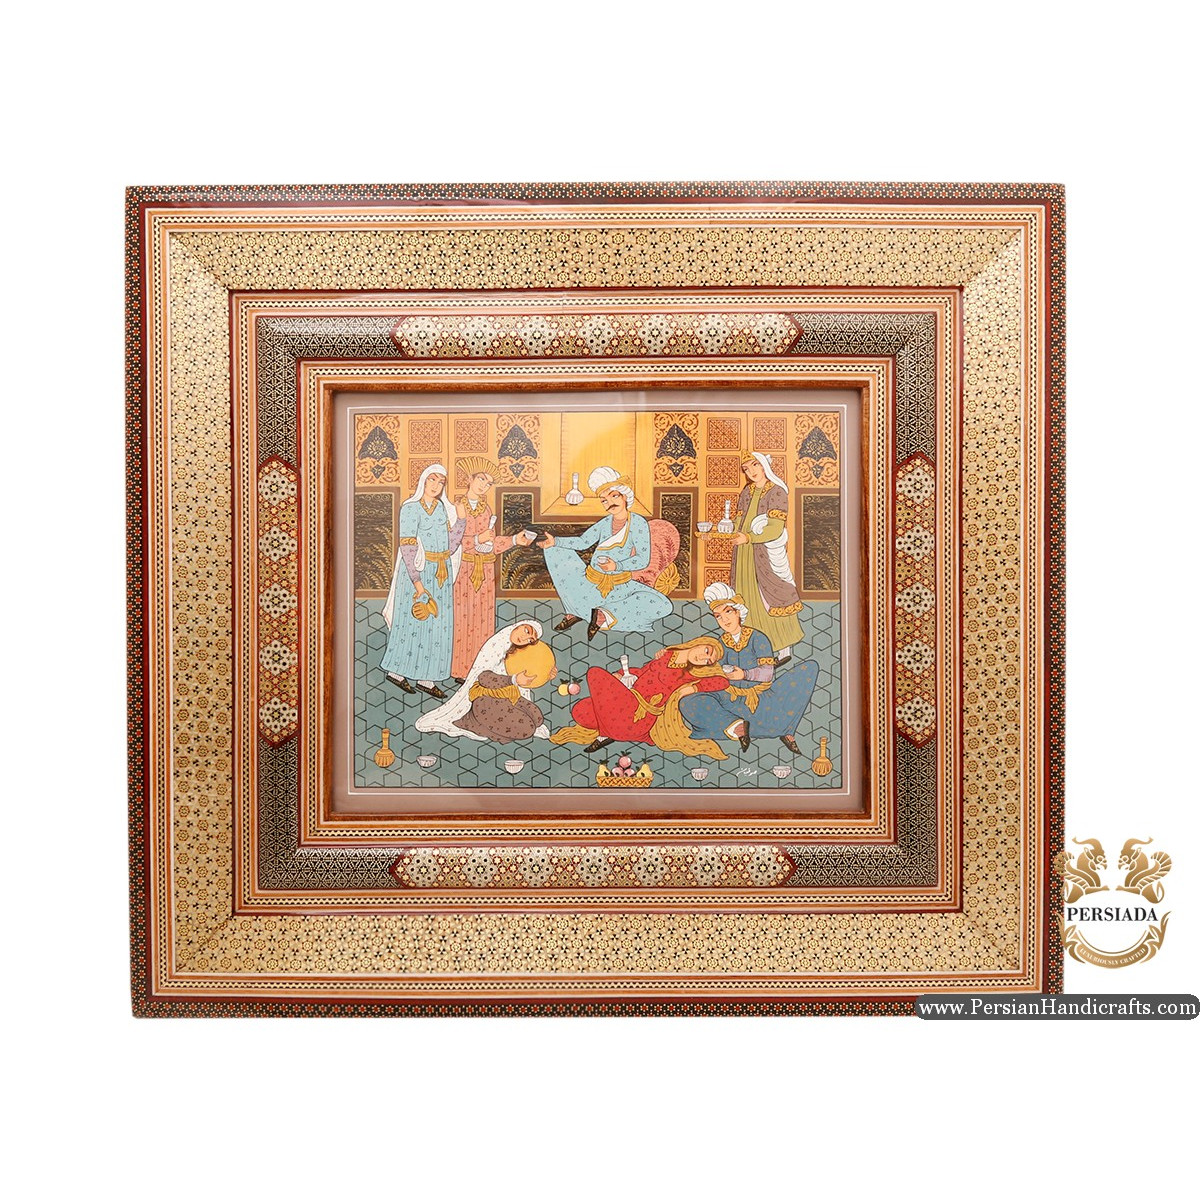 Decorative Painting Khatam Frame | Hand Painting Miniature | Persiada HM6102